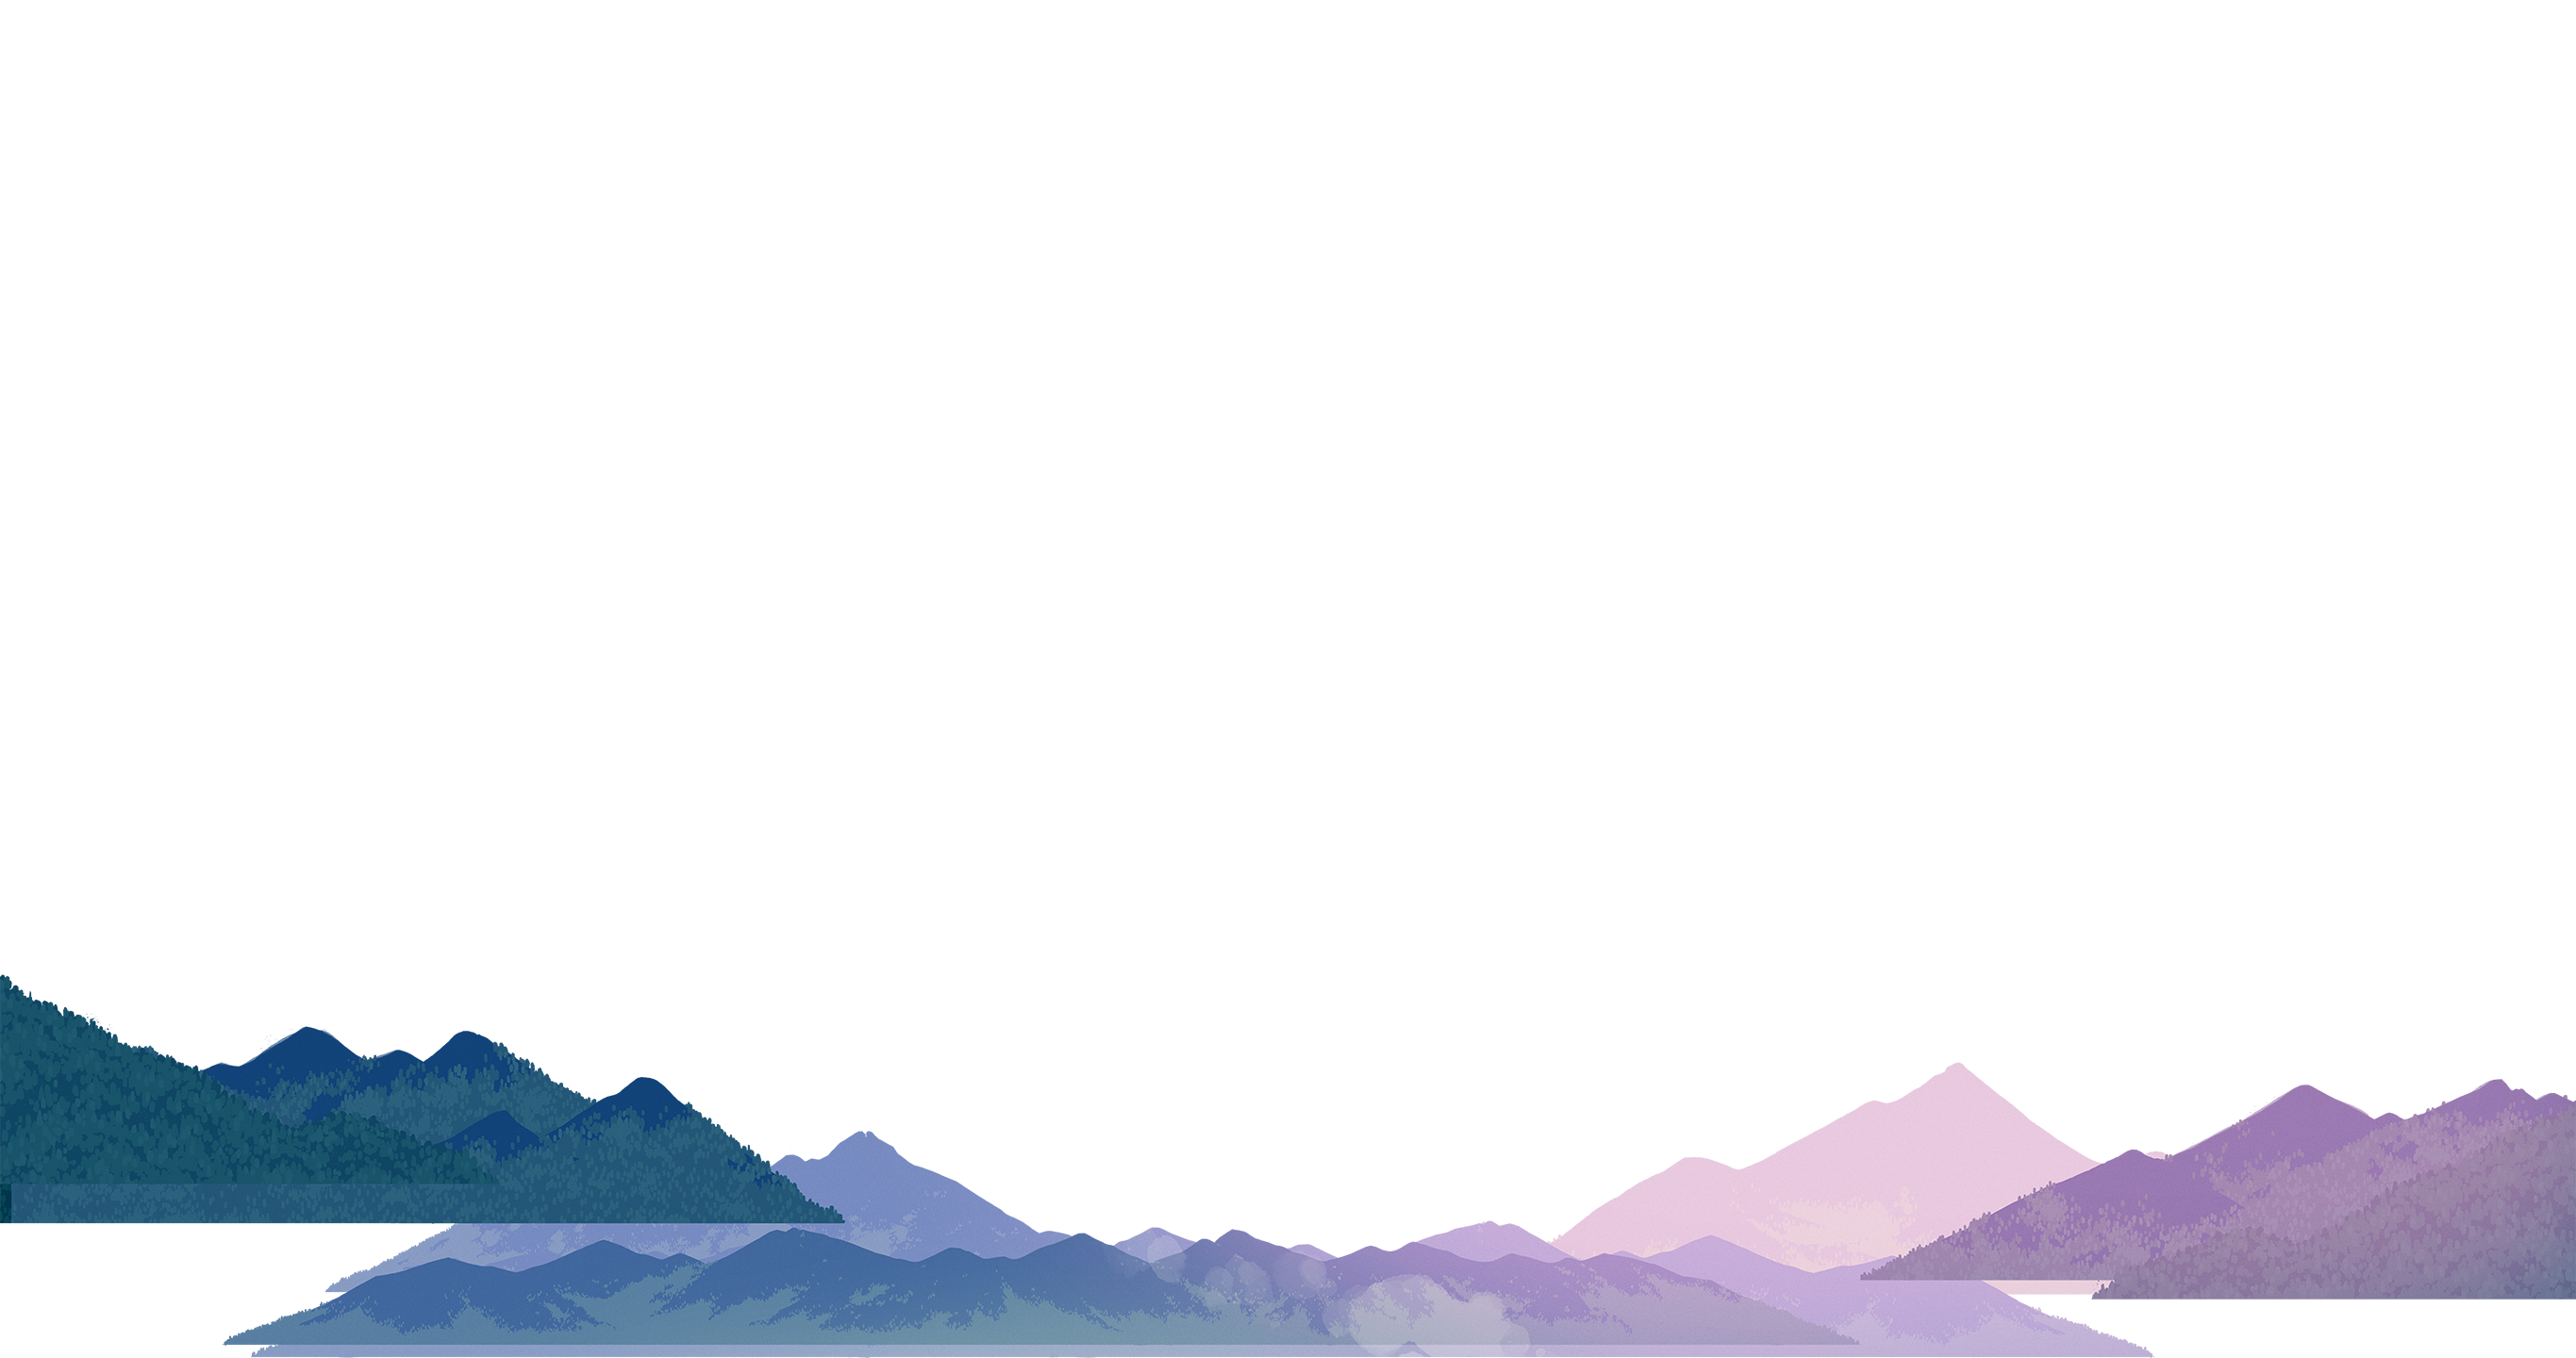 Background image displaying mountains